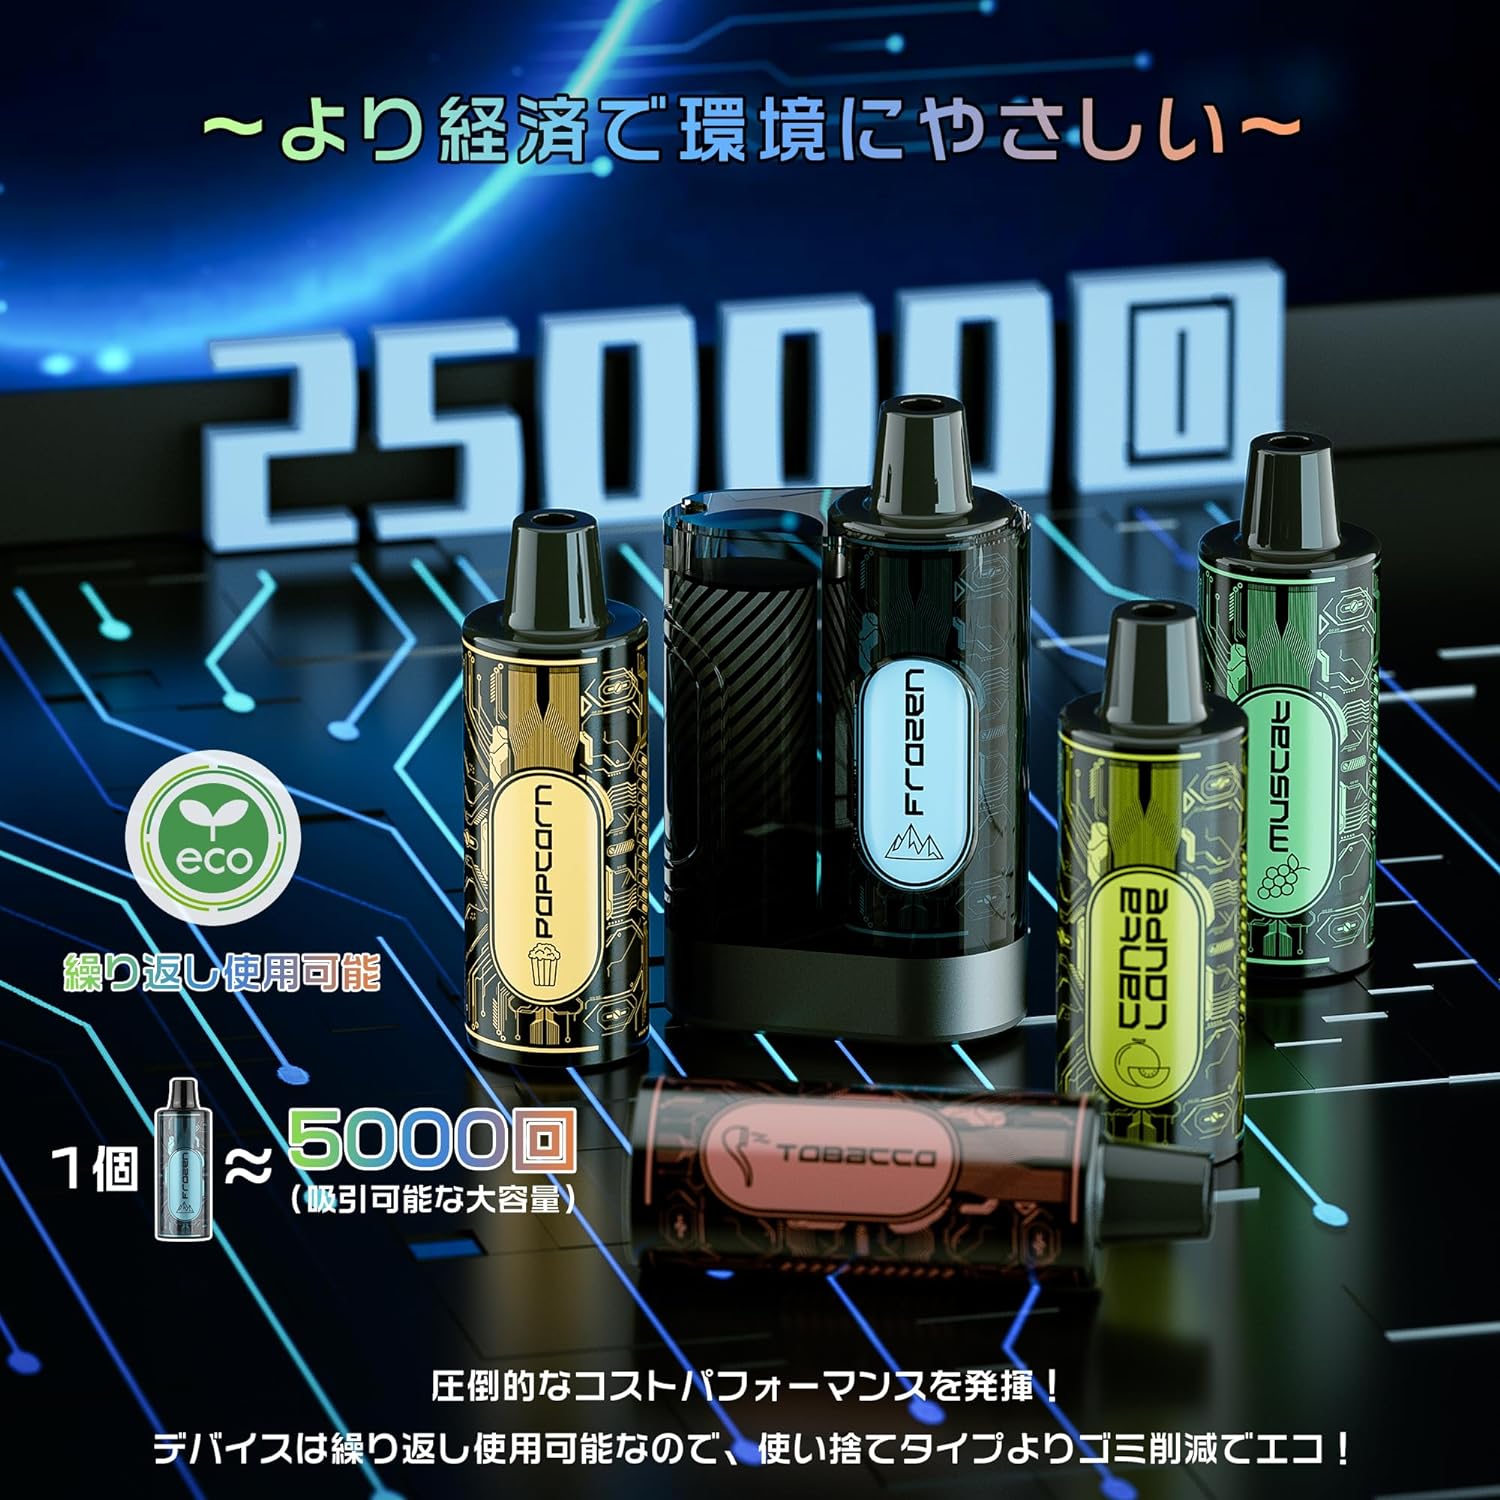 ARASHI 電子タバコ カートリッジ 5000回吸引 ニコチン0 タール0 使い捨て ポッド I3（パイナップル）